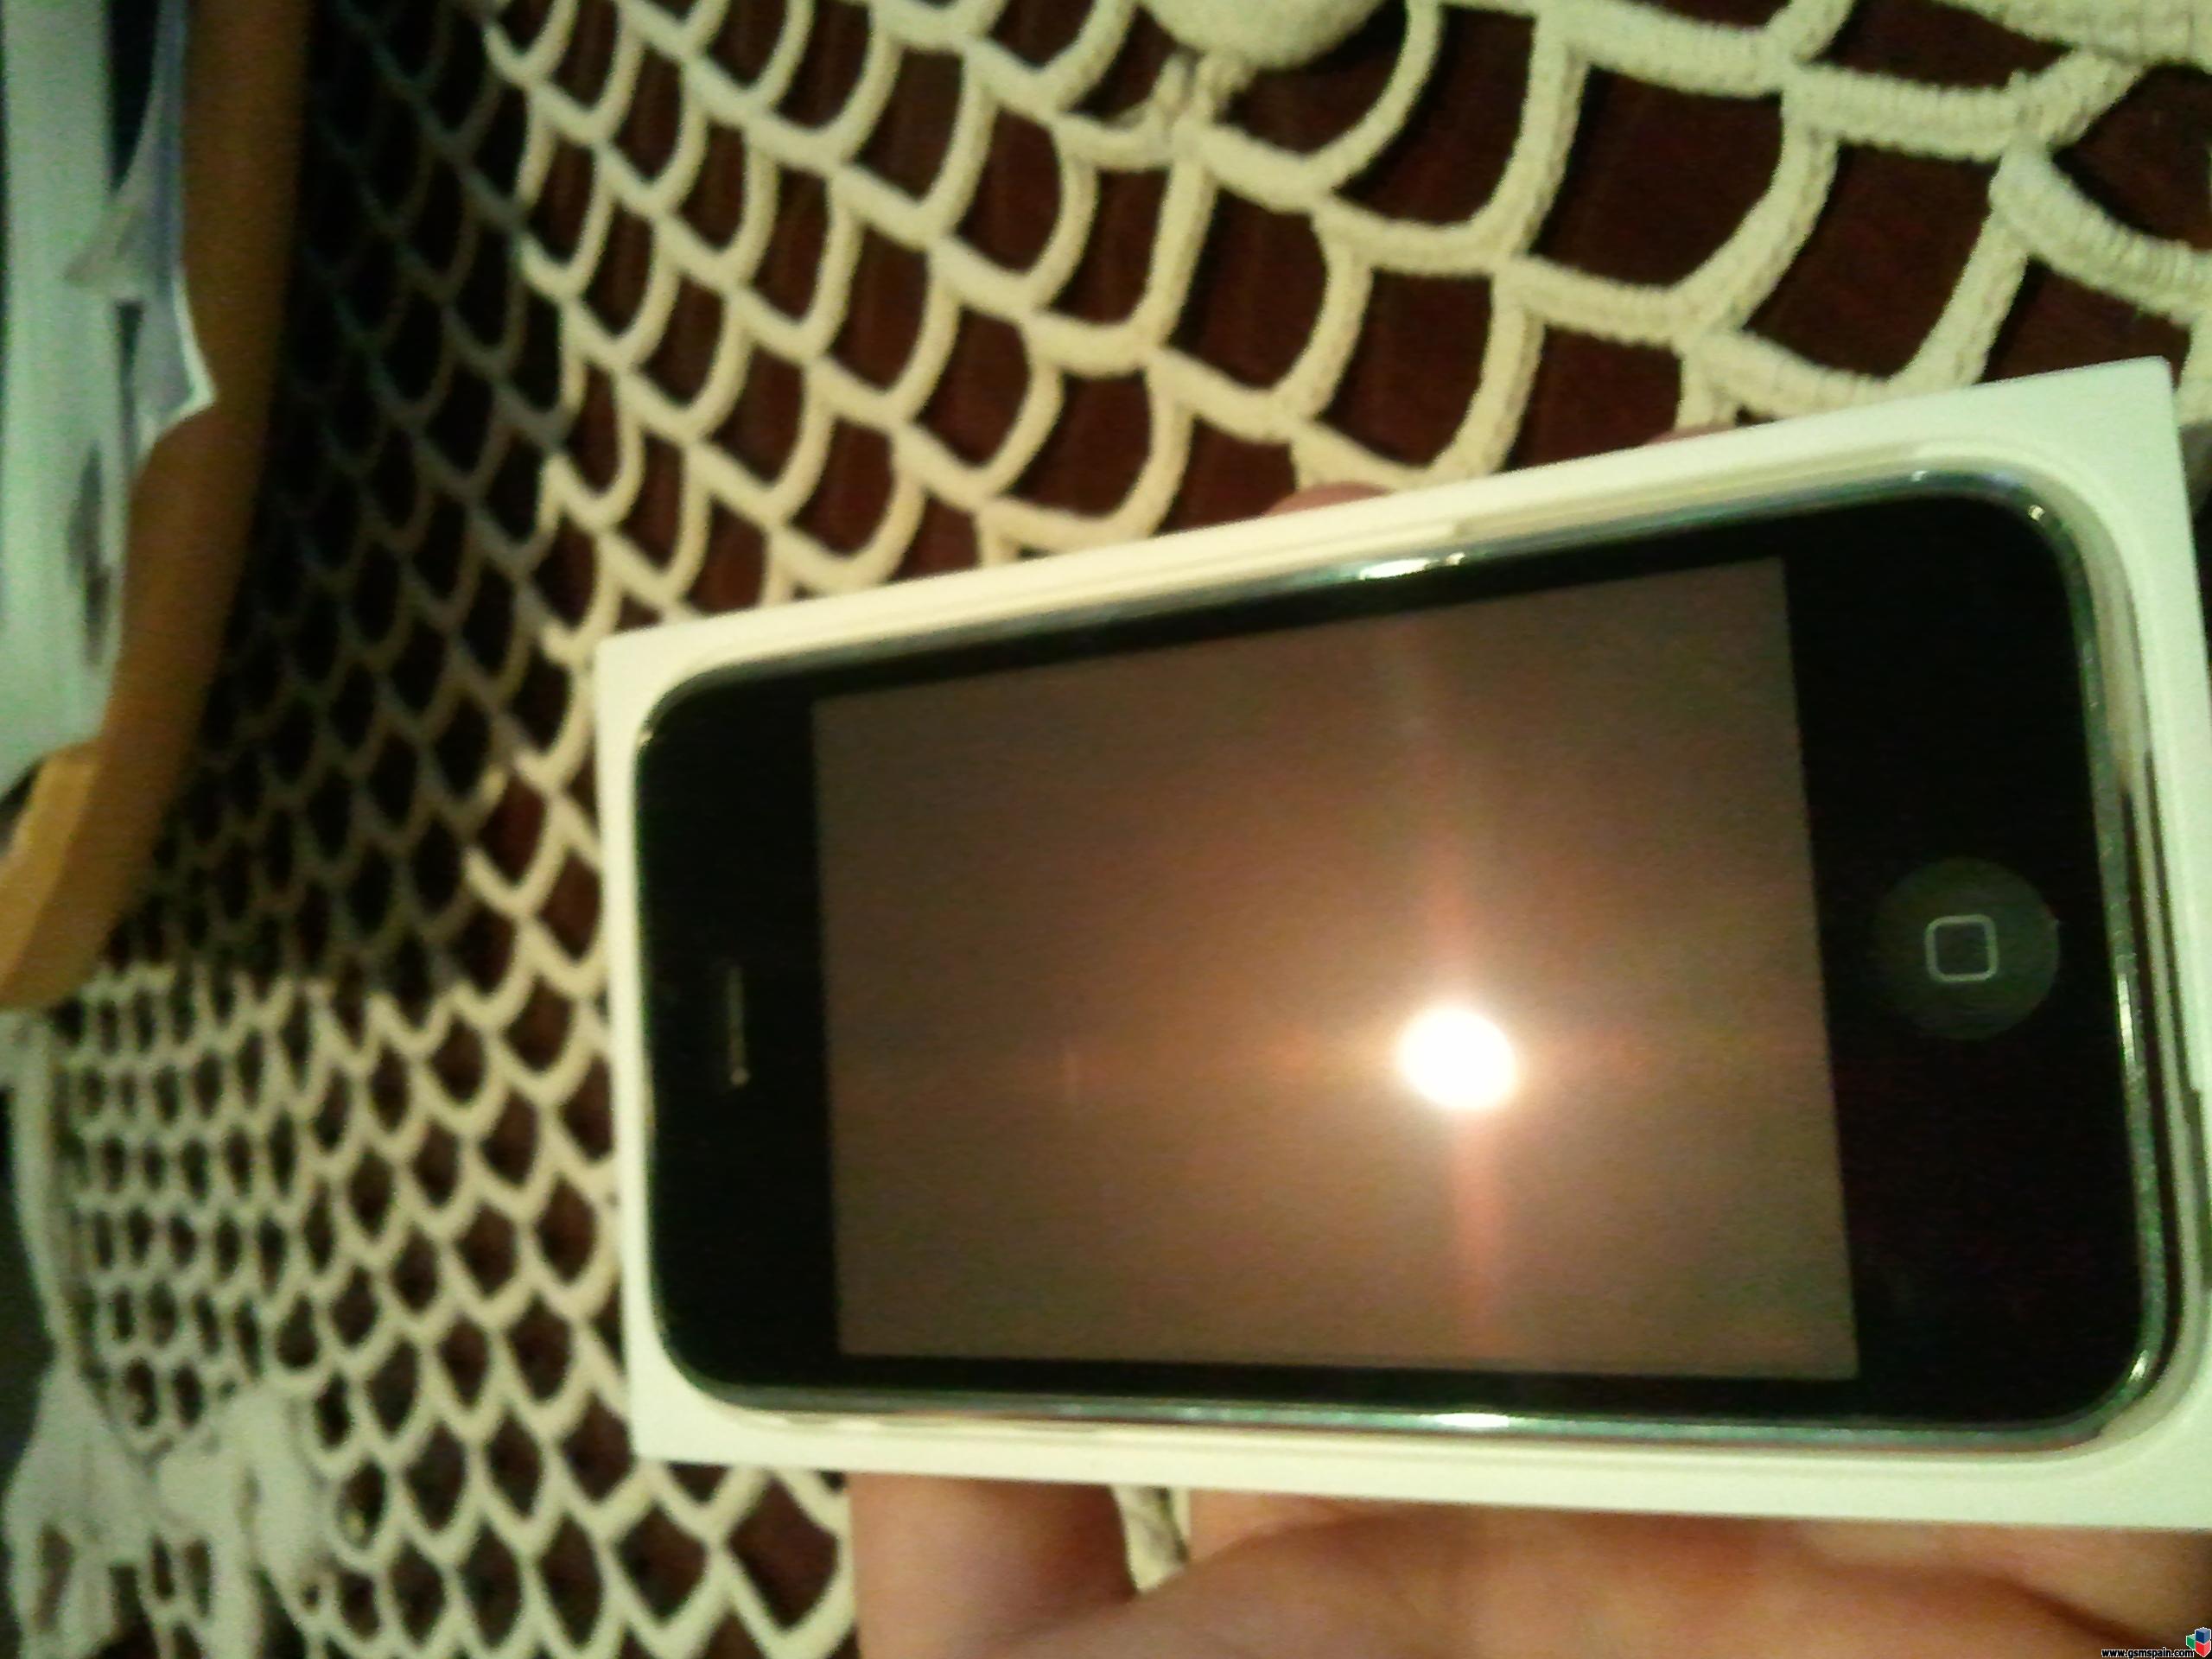 [VENDO] IPhone 3GS 32gb blanco movistar +garantia apple nuevo!!!!!!!!!!!!!